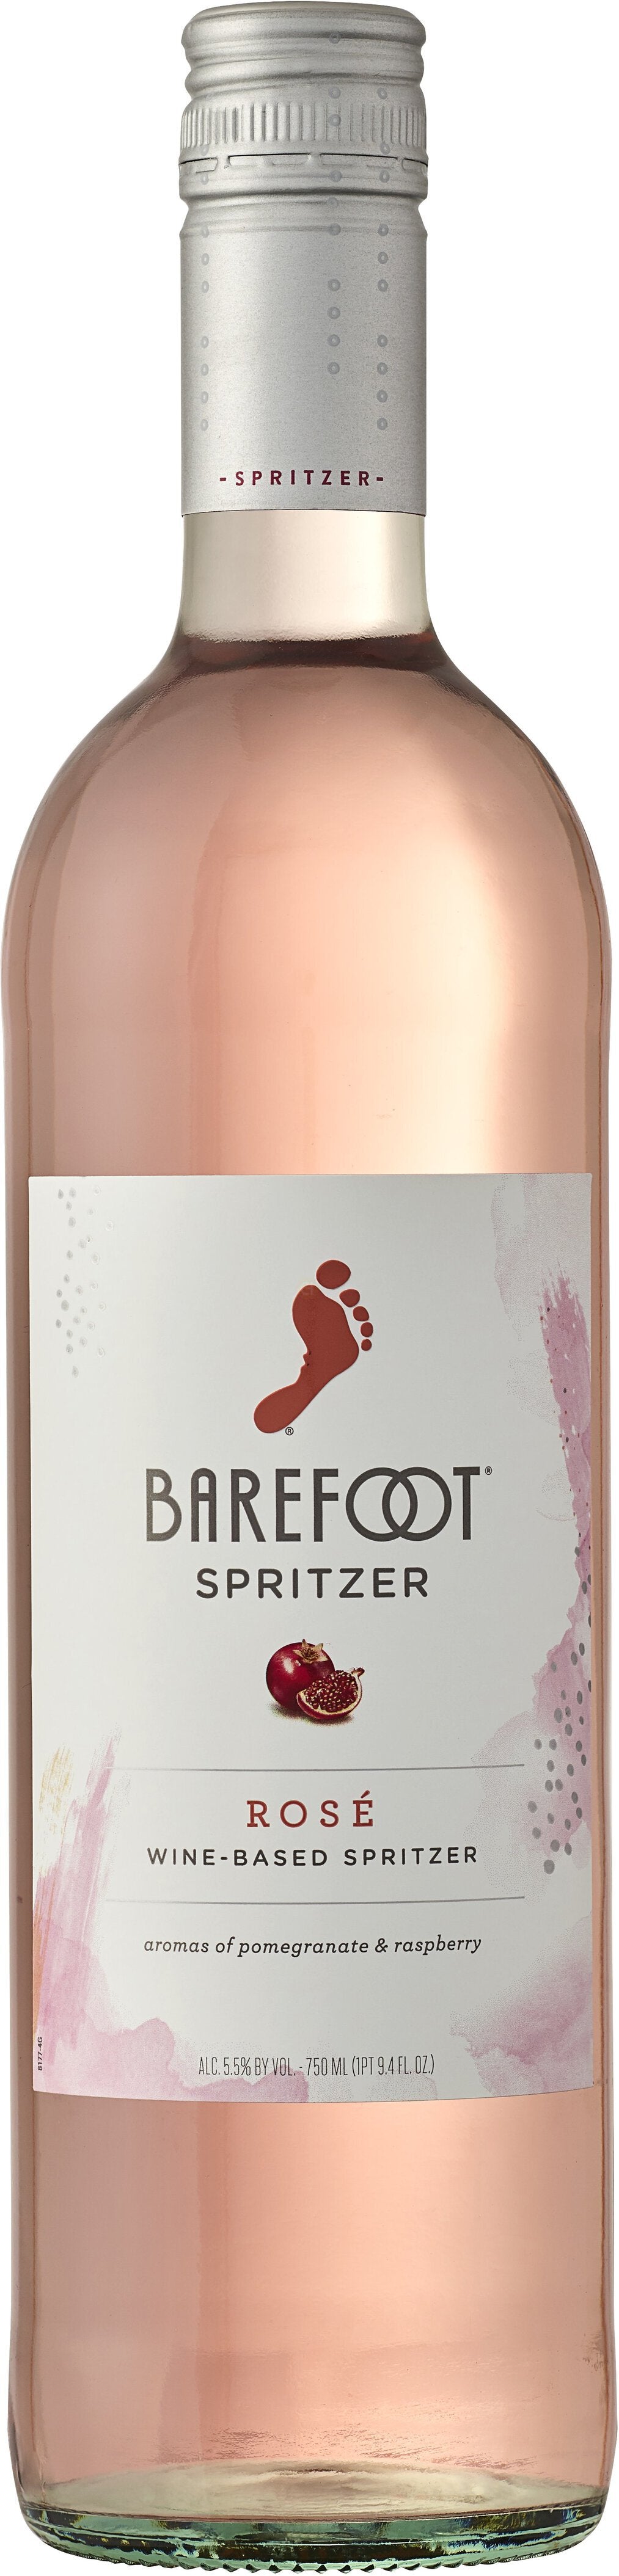 Barefoot Spritzer Rosé